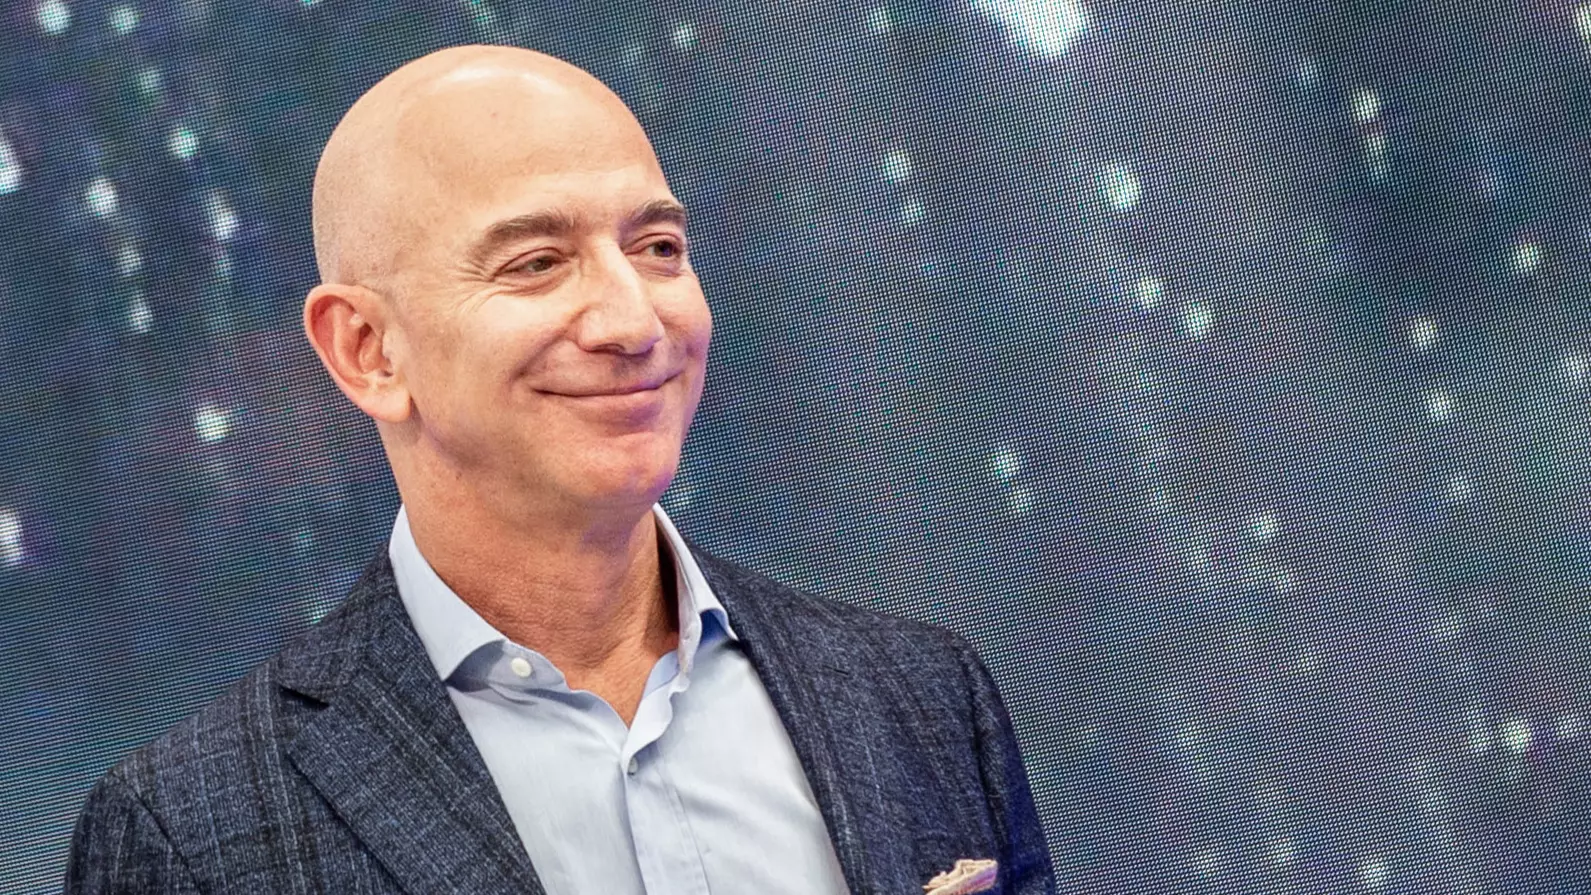 Jeff Bezos Made £13 Billion In Just 17 Minutes